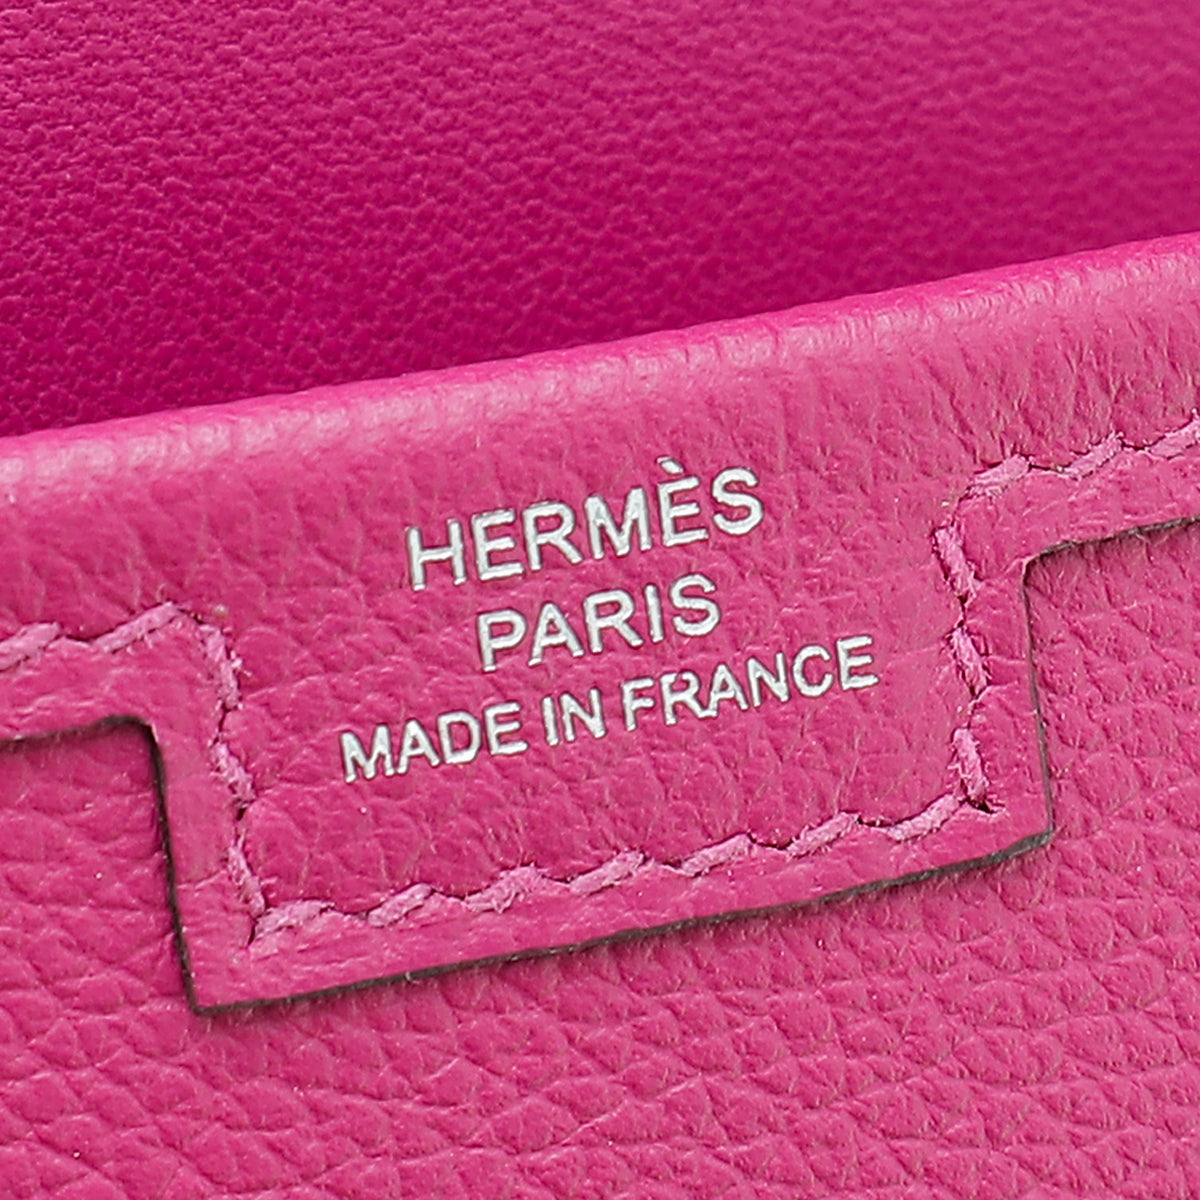 Brand new Hermes Jige Elan Clutch 29 - Rose Pourpre Pink Swift